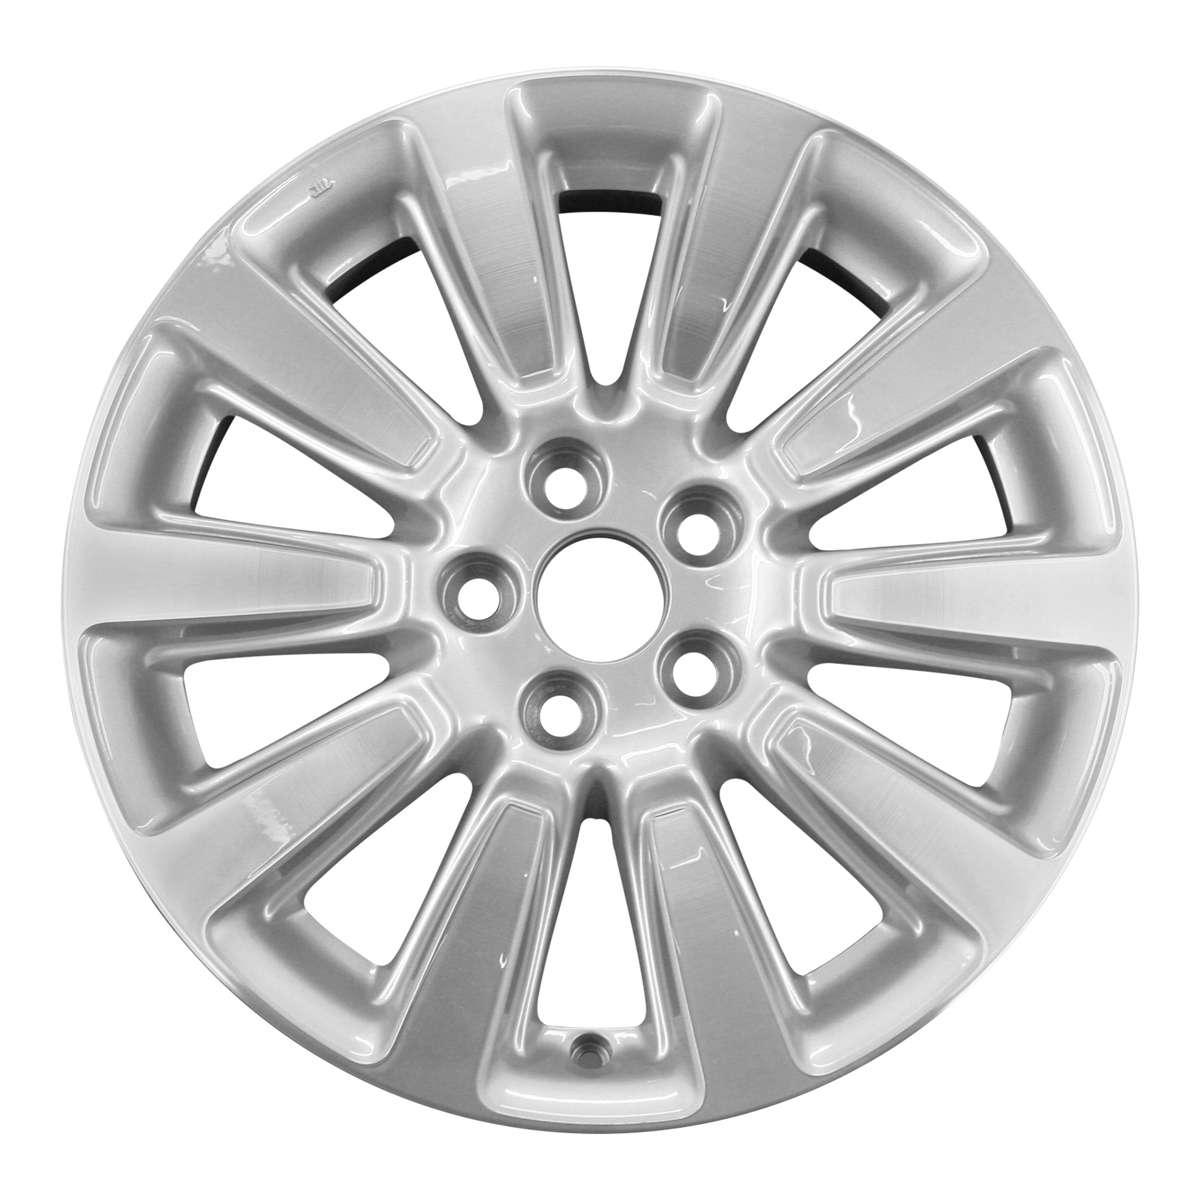 2019 Toyota Sienna 18" OEM Wheel Rim Thin Valve Stem Hole W69583MS